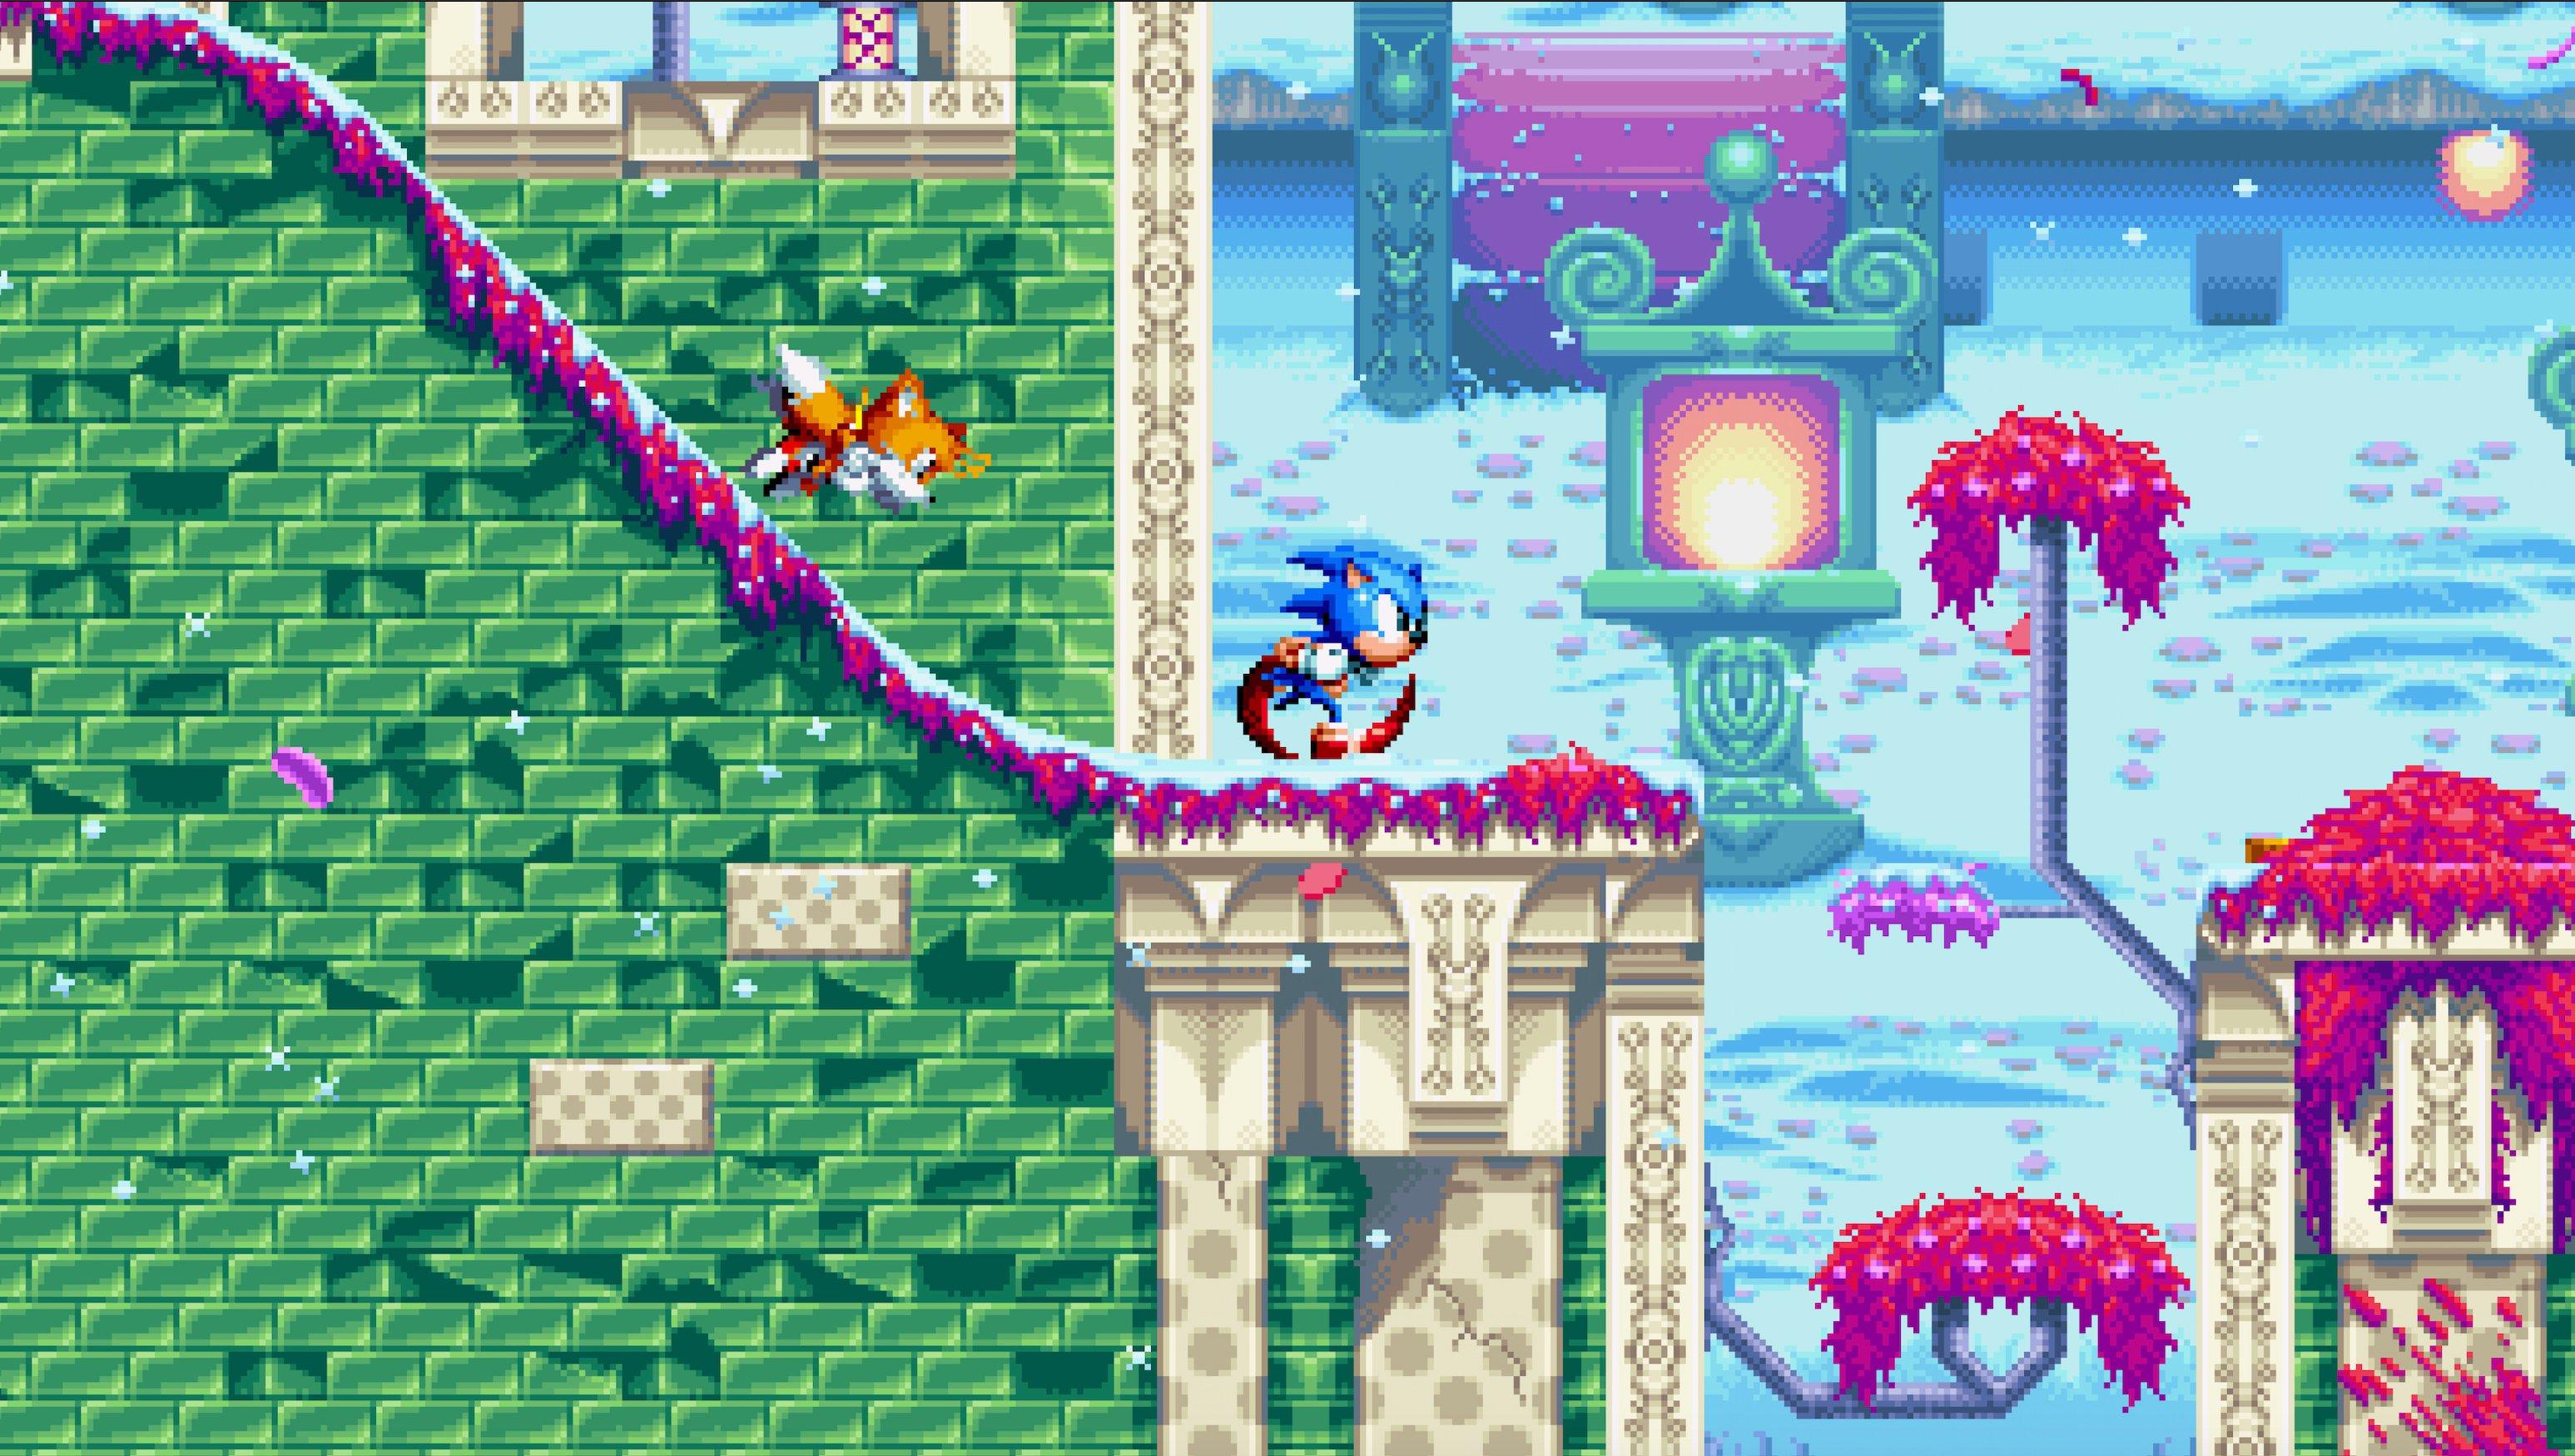 Juego PS4 Sonic Mania Plus